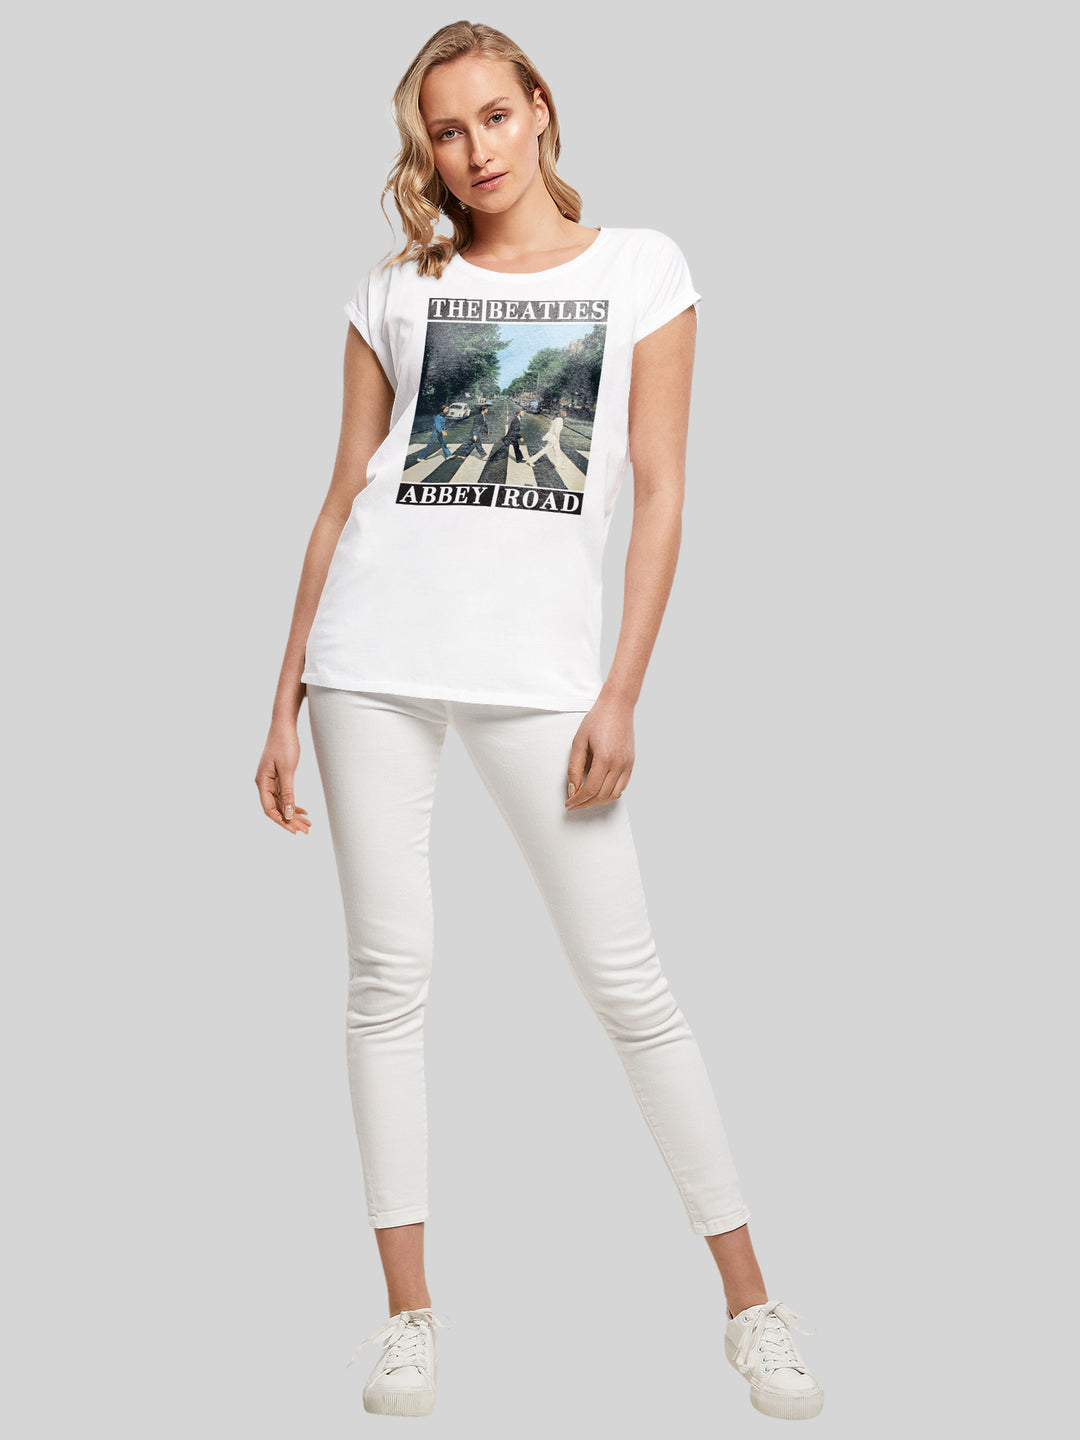 The Beatles T-Shirt | Abbey Road | Premium Short Sleeve Ladies Tee